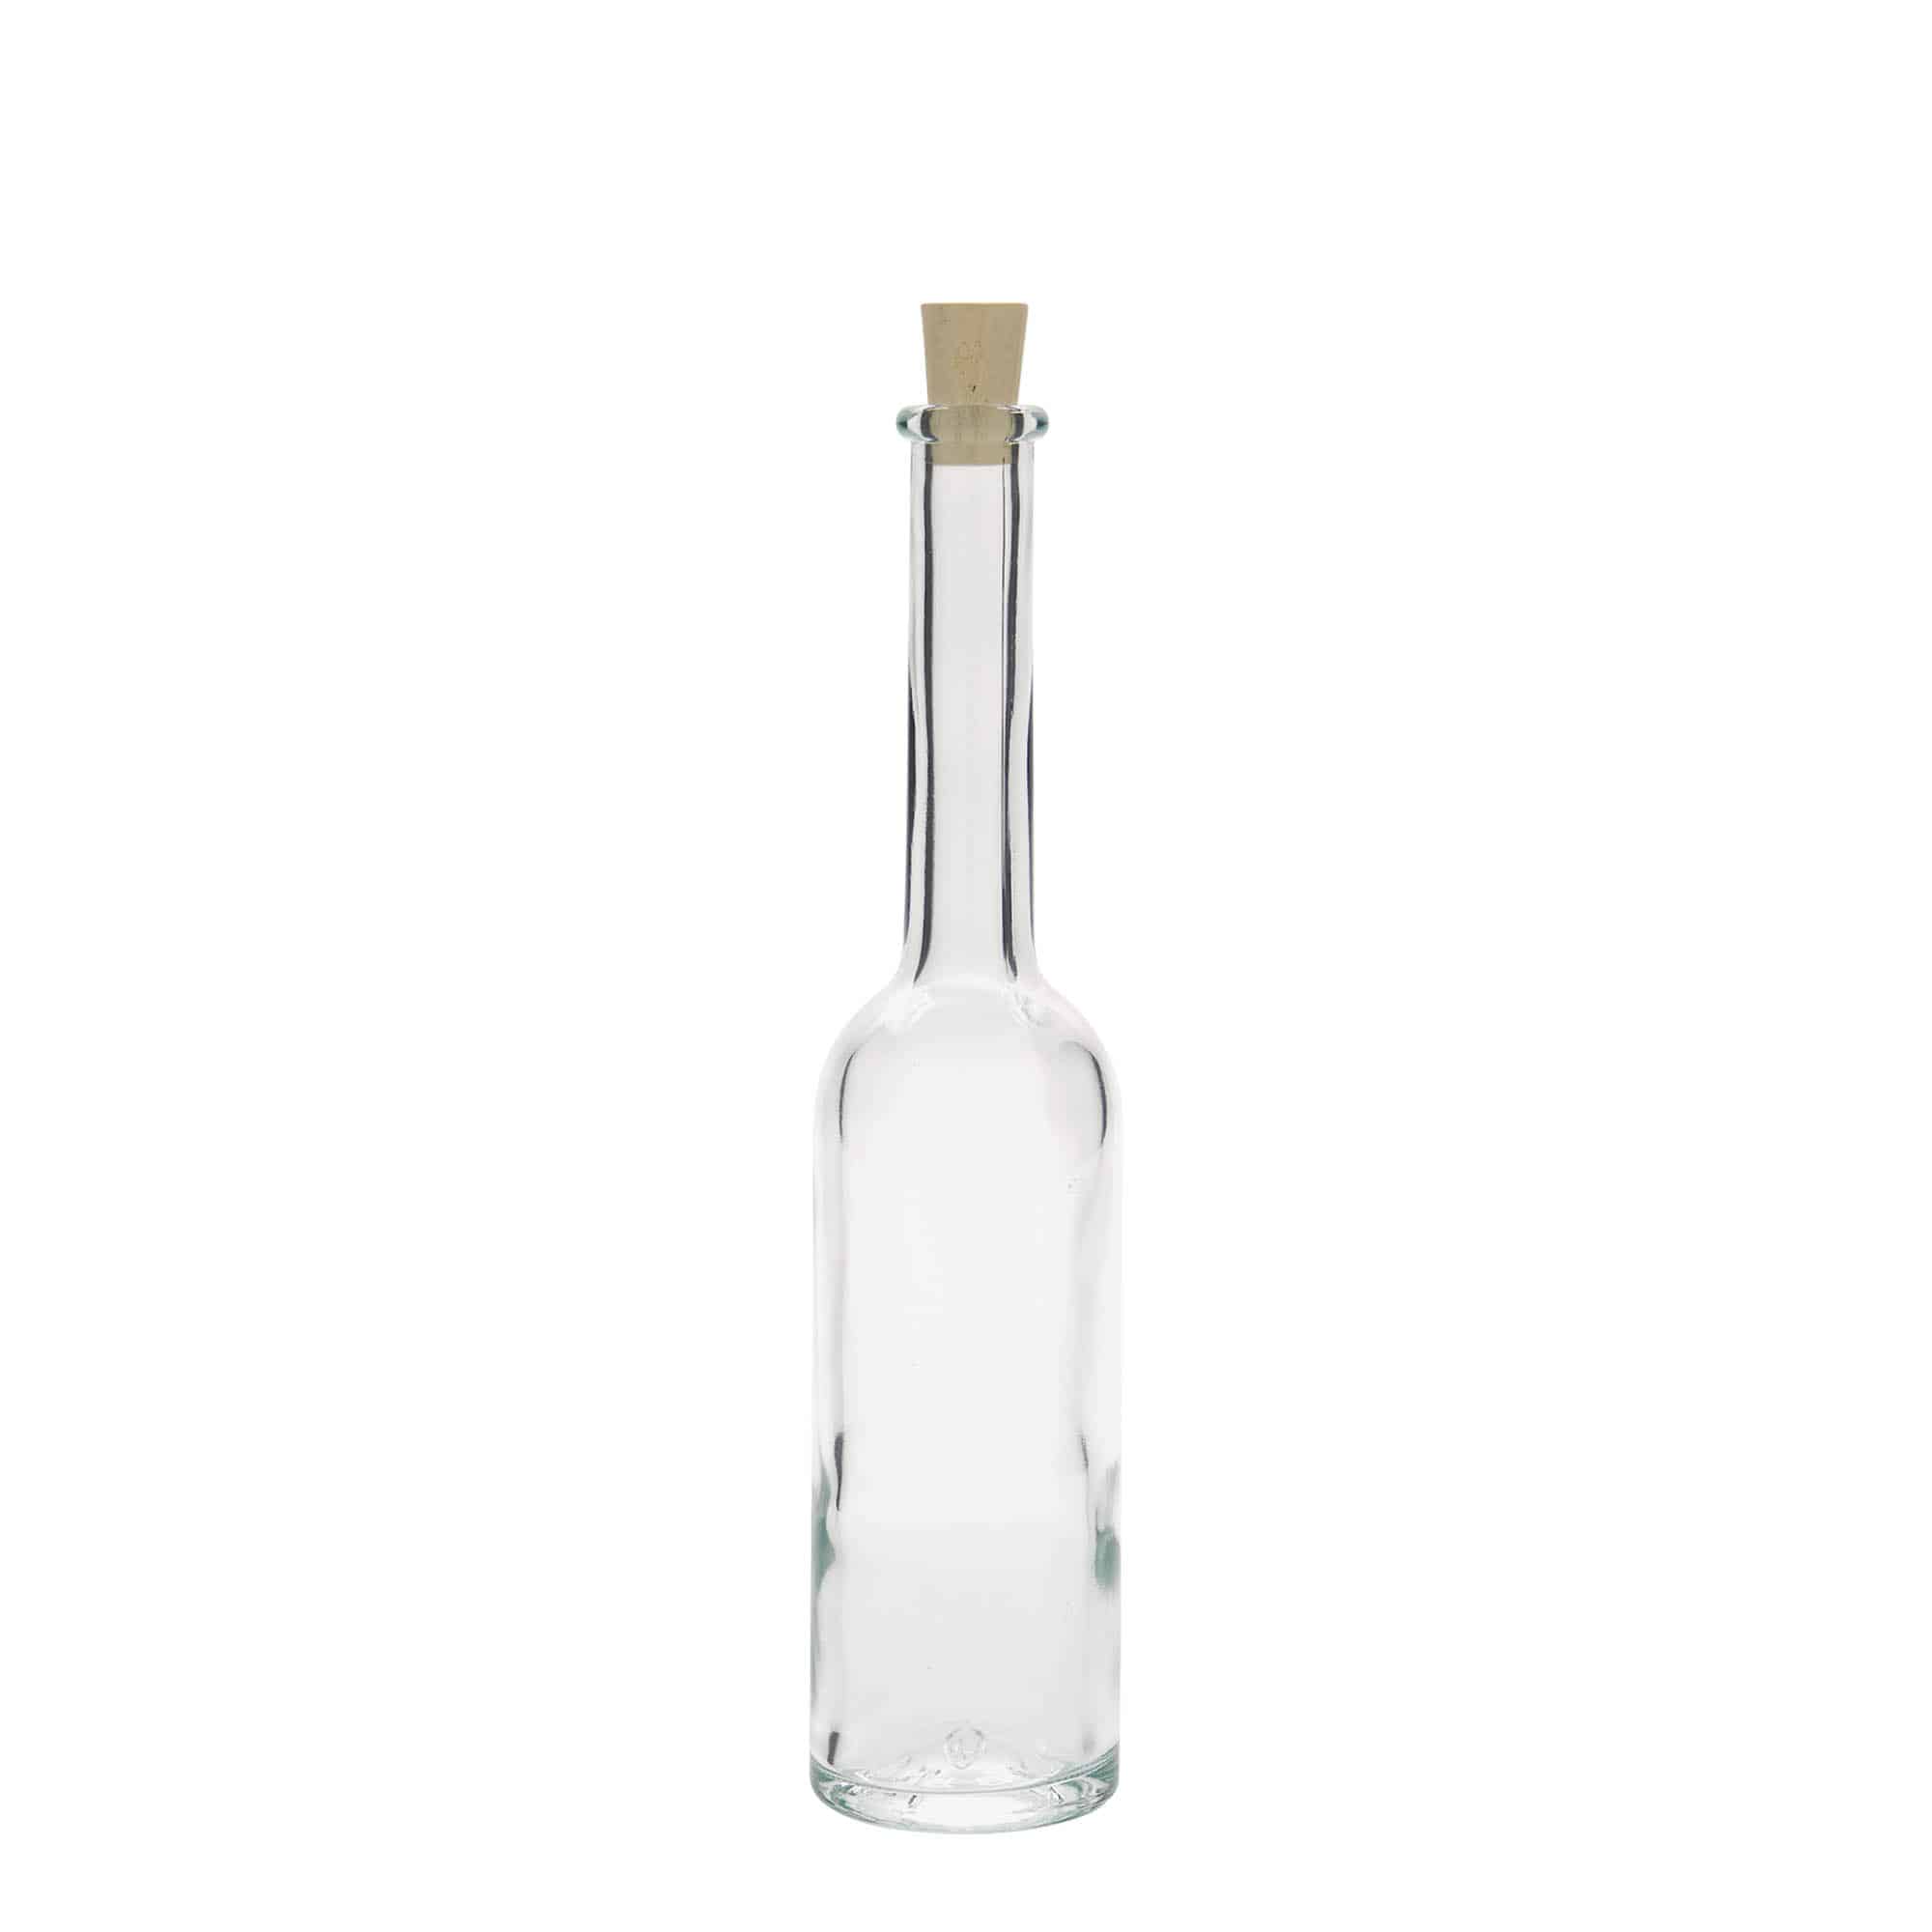 100 ml glass bottle 'Opera', closure: cork